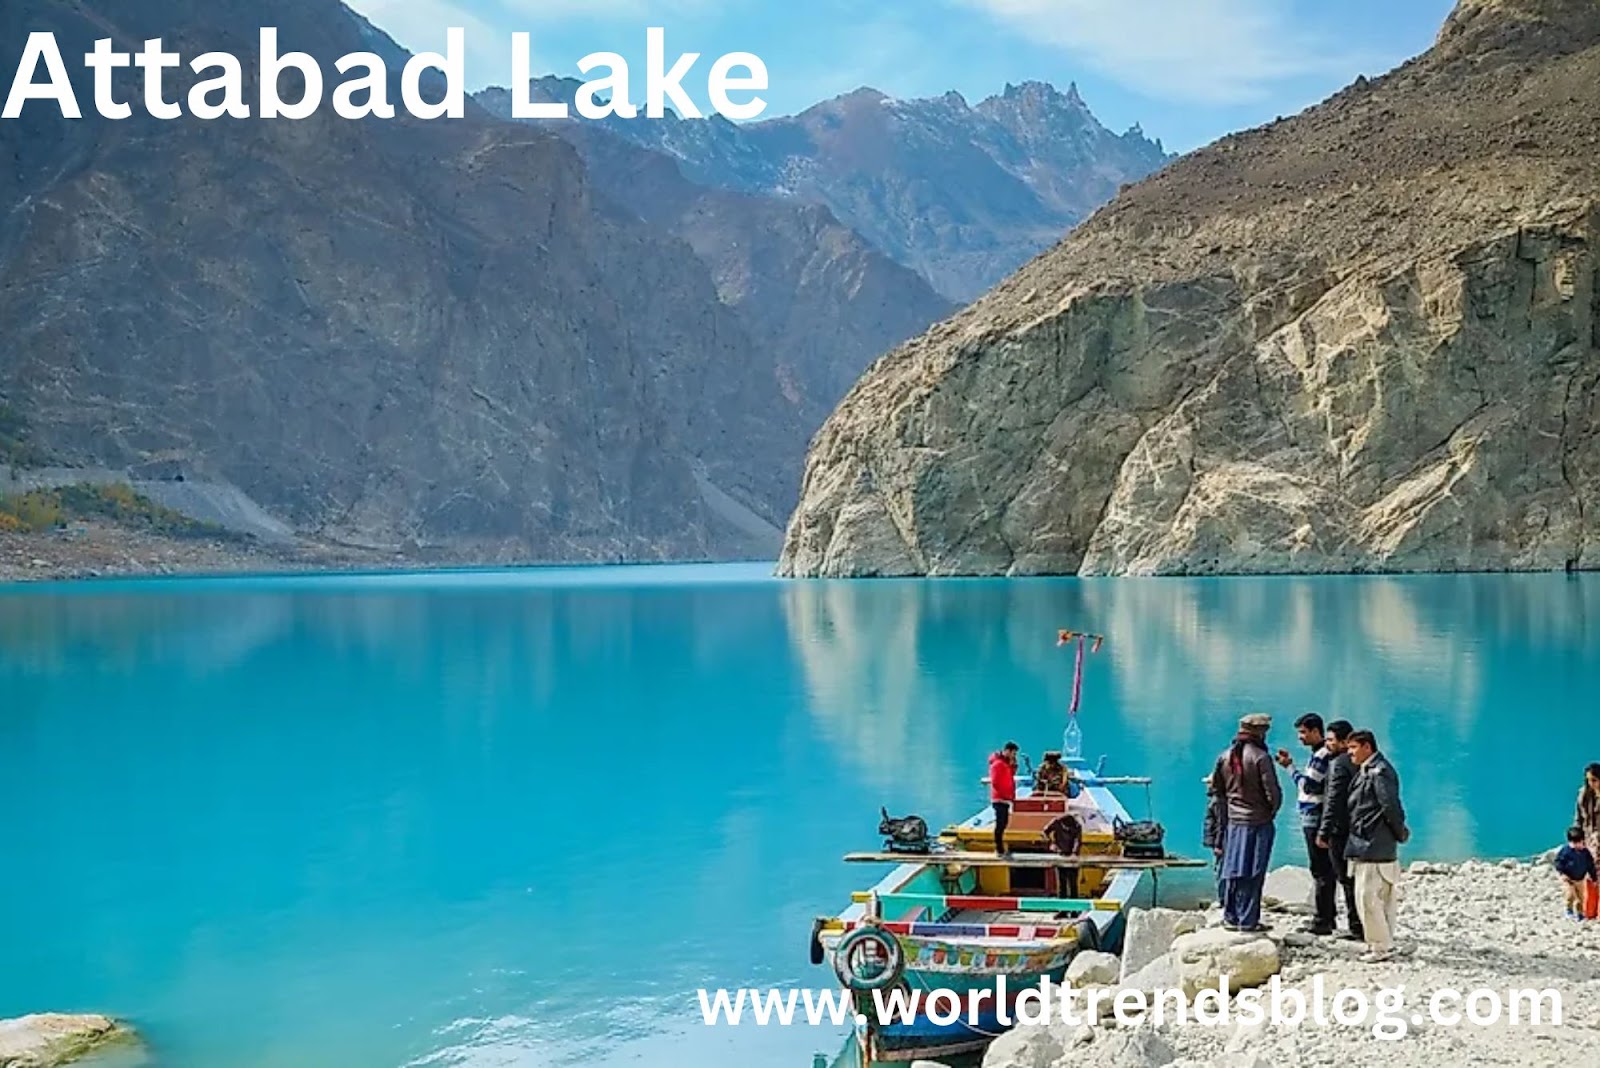 Attabad Lake Natural Wonder of Pakistan